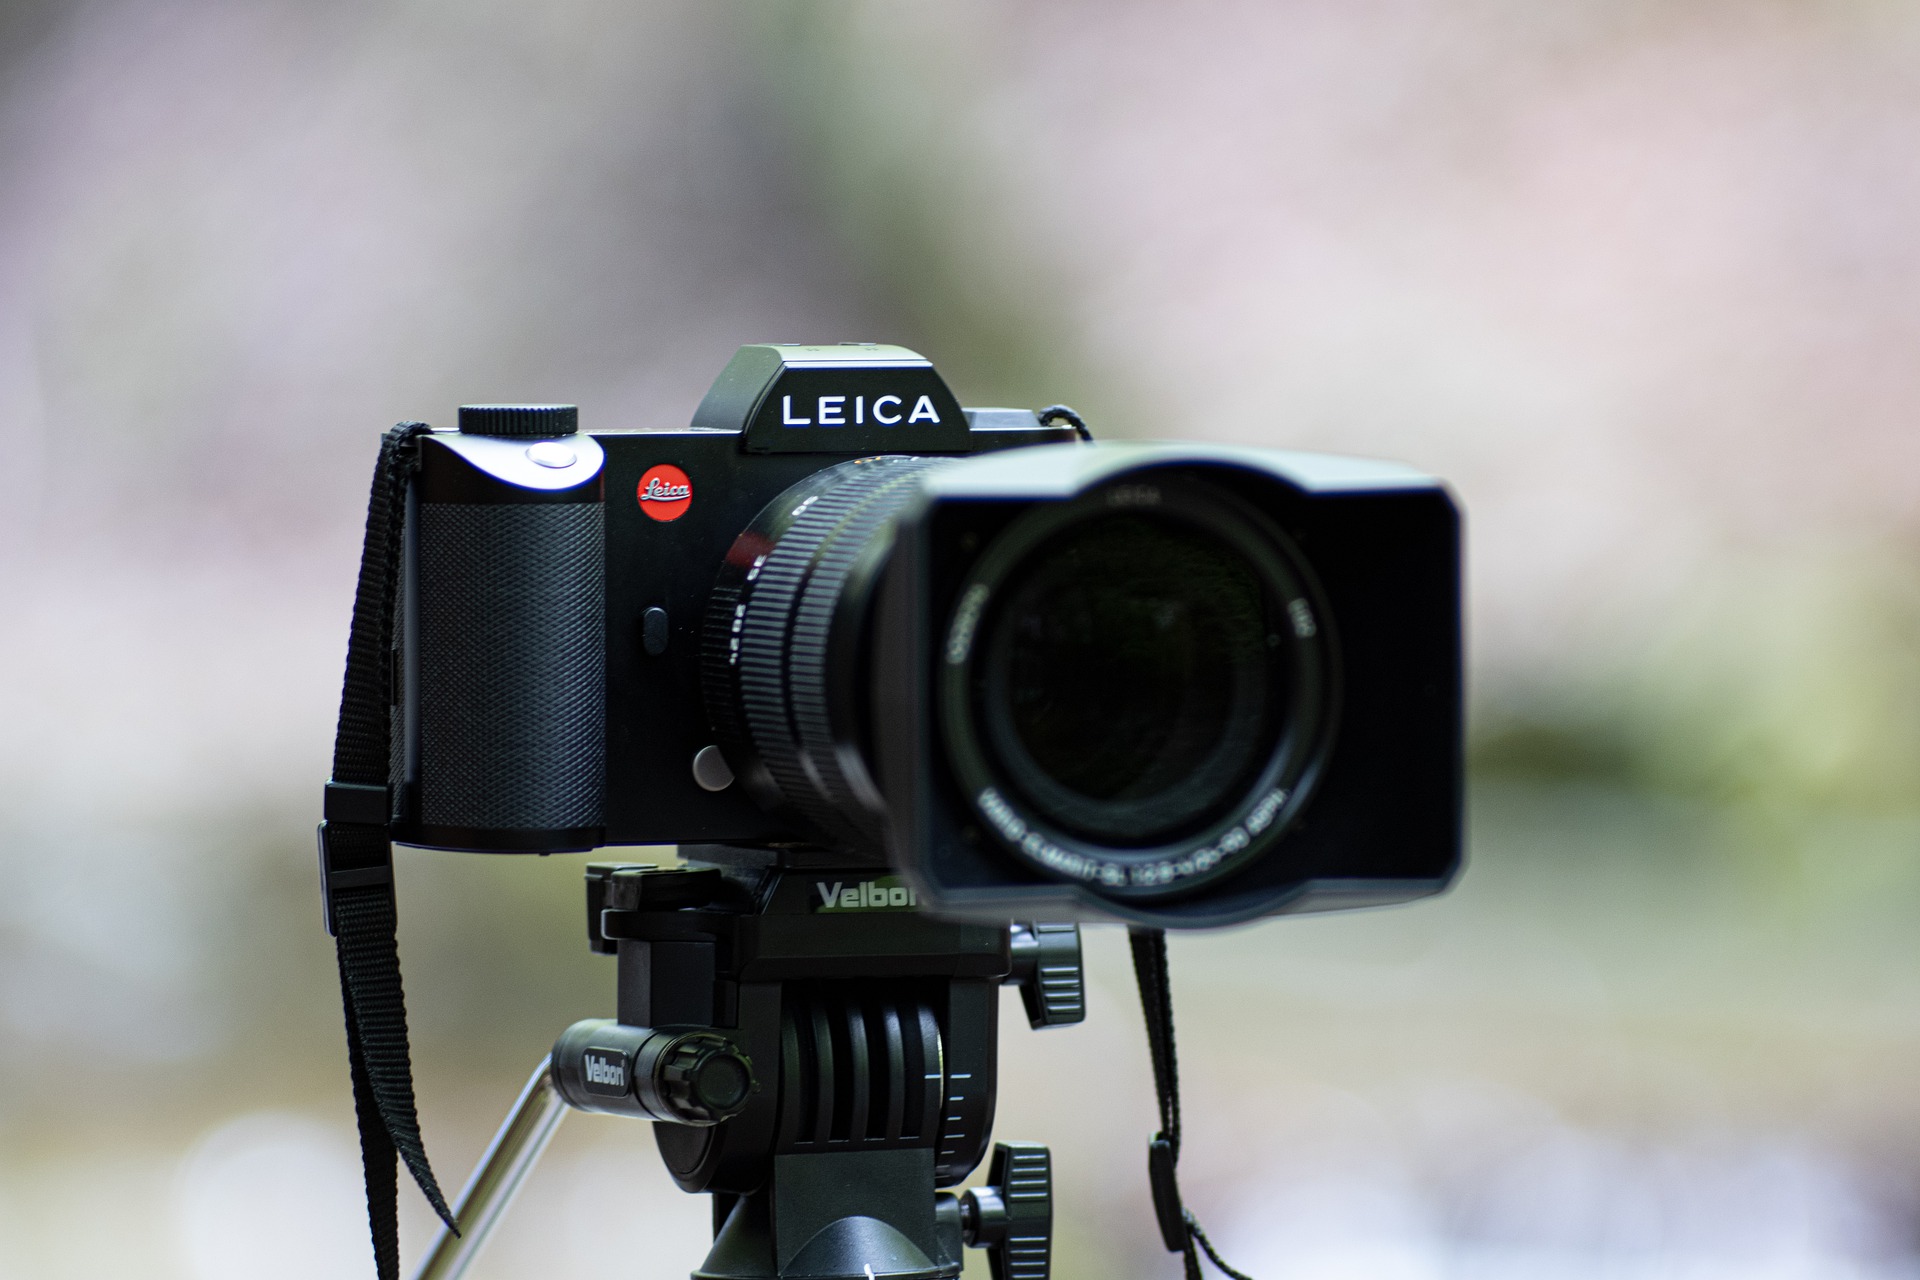 Leica SL with a Leica Vario Lens on a tripod